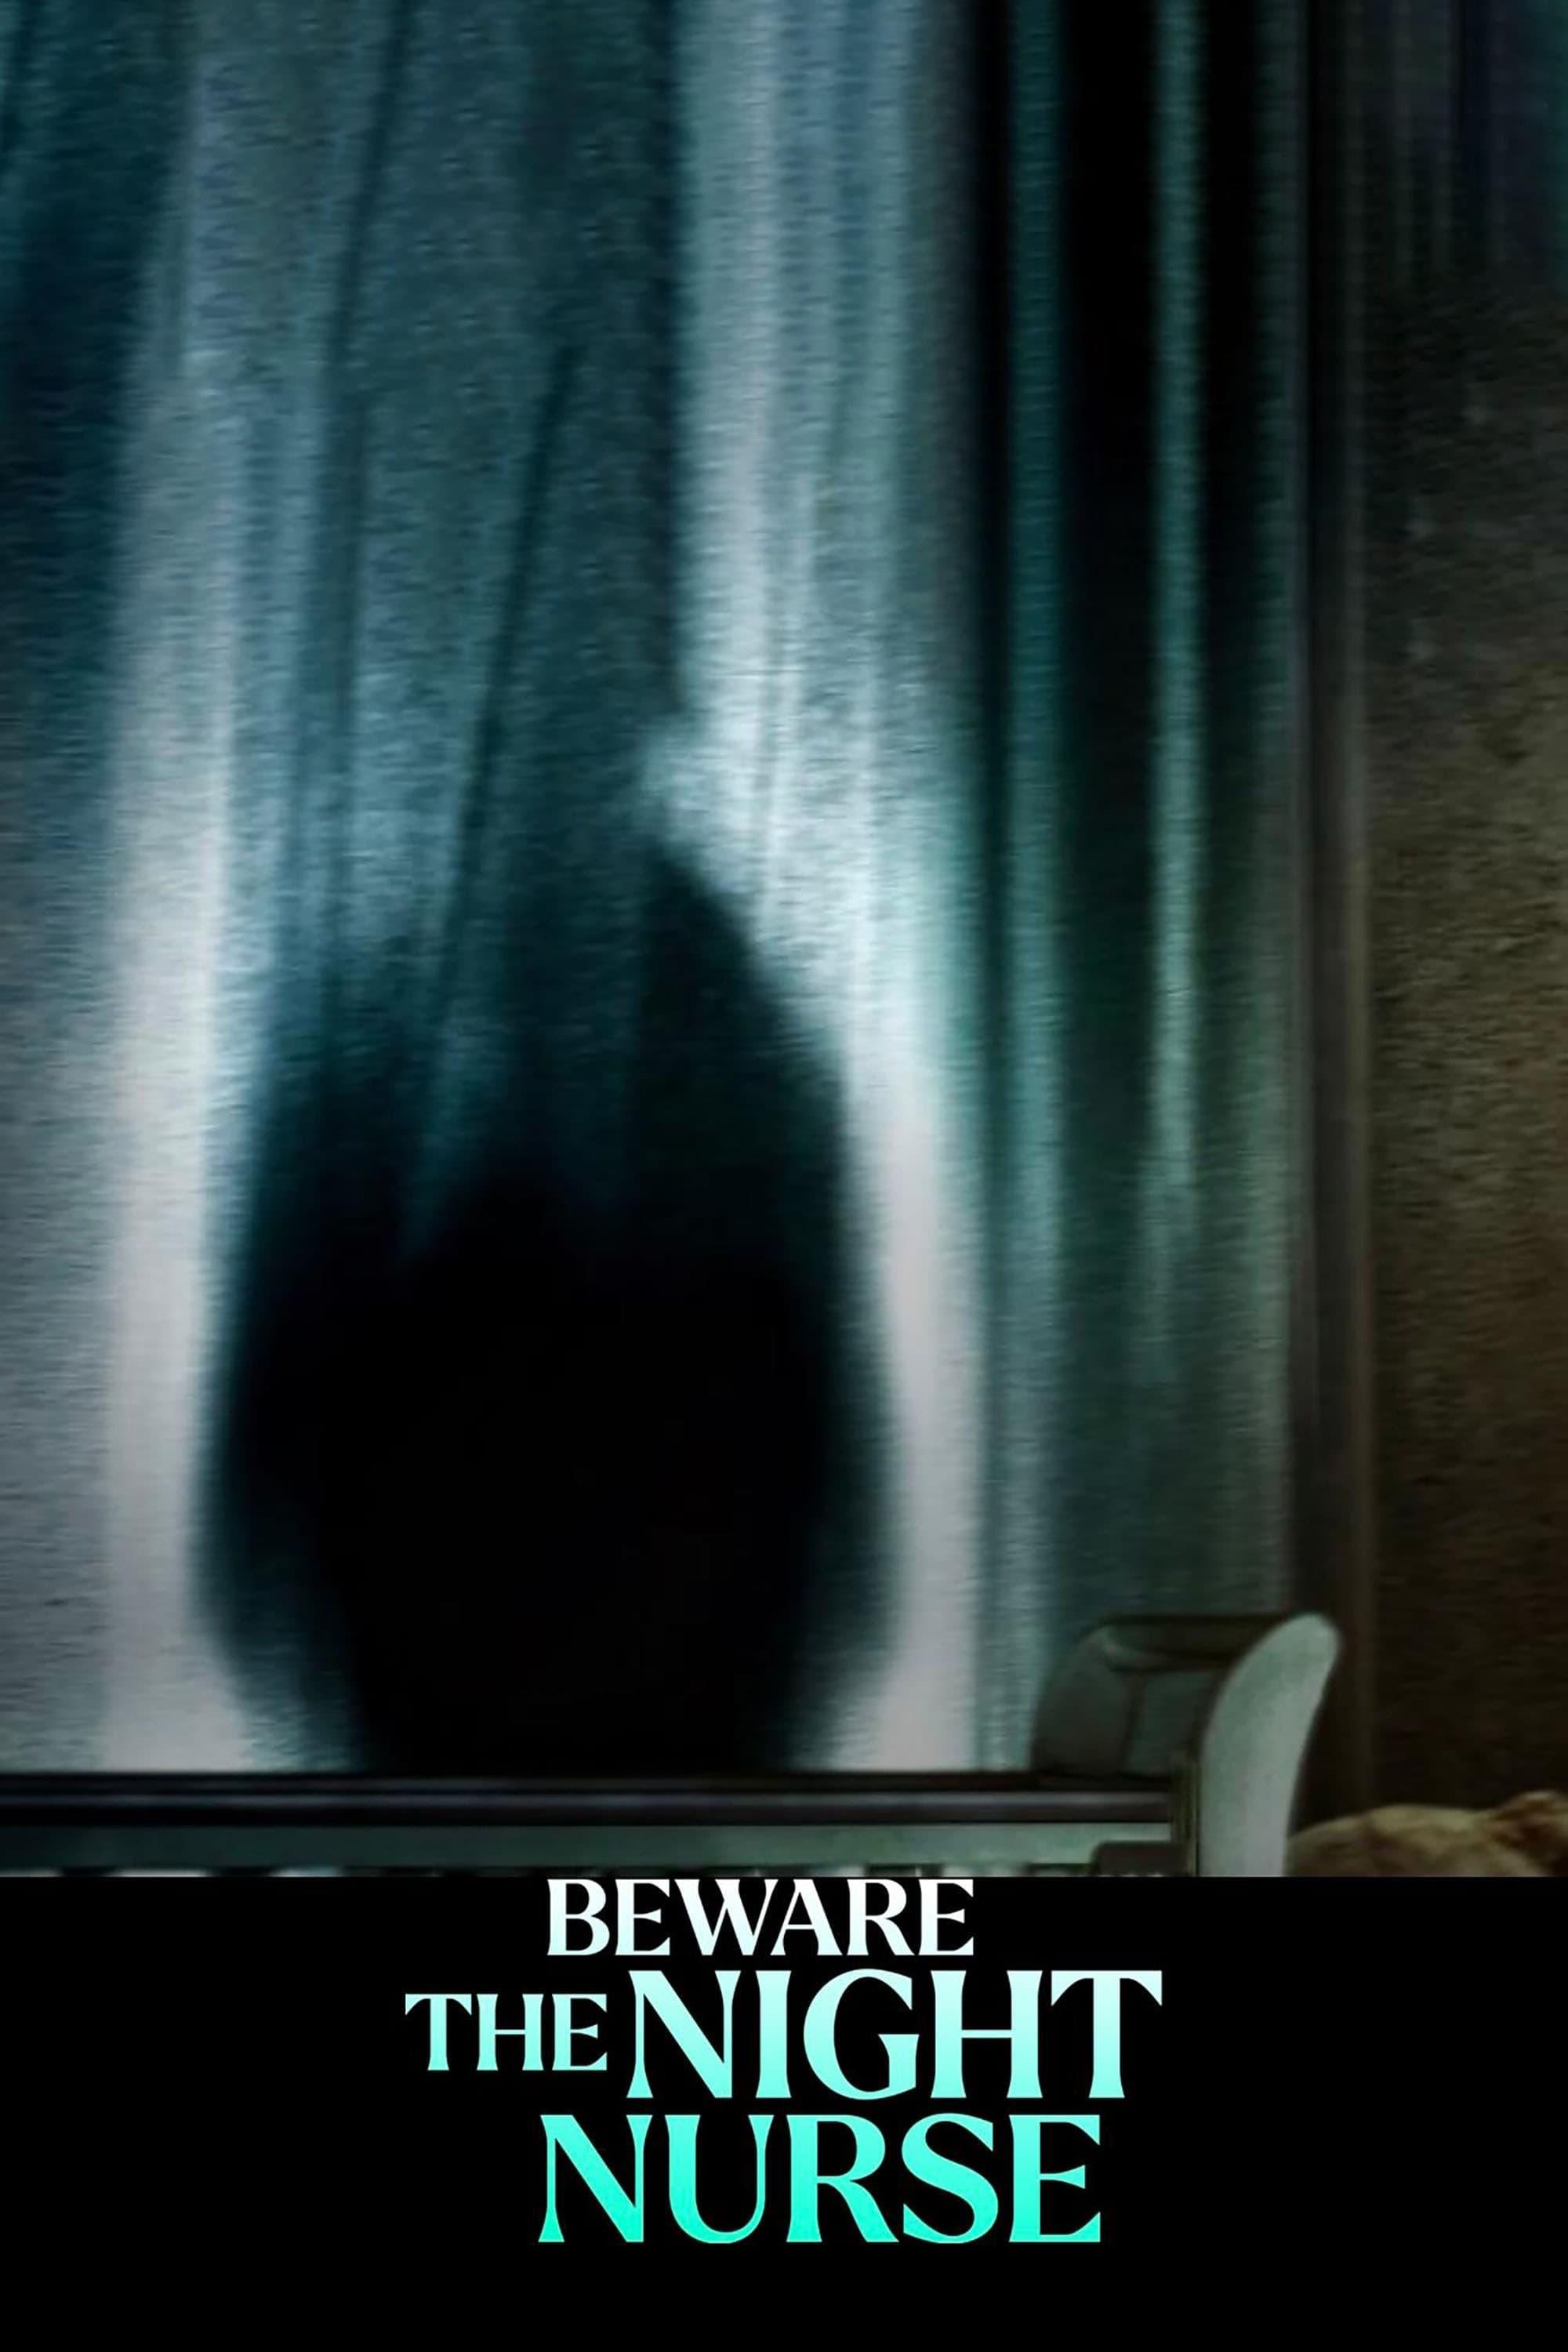 Beware the Night Nurse poster